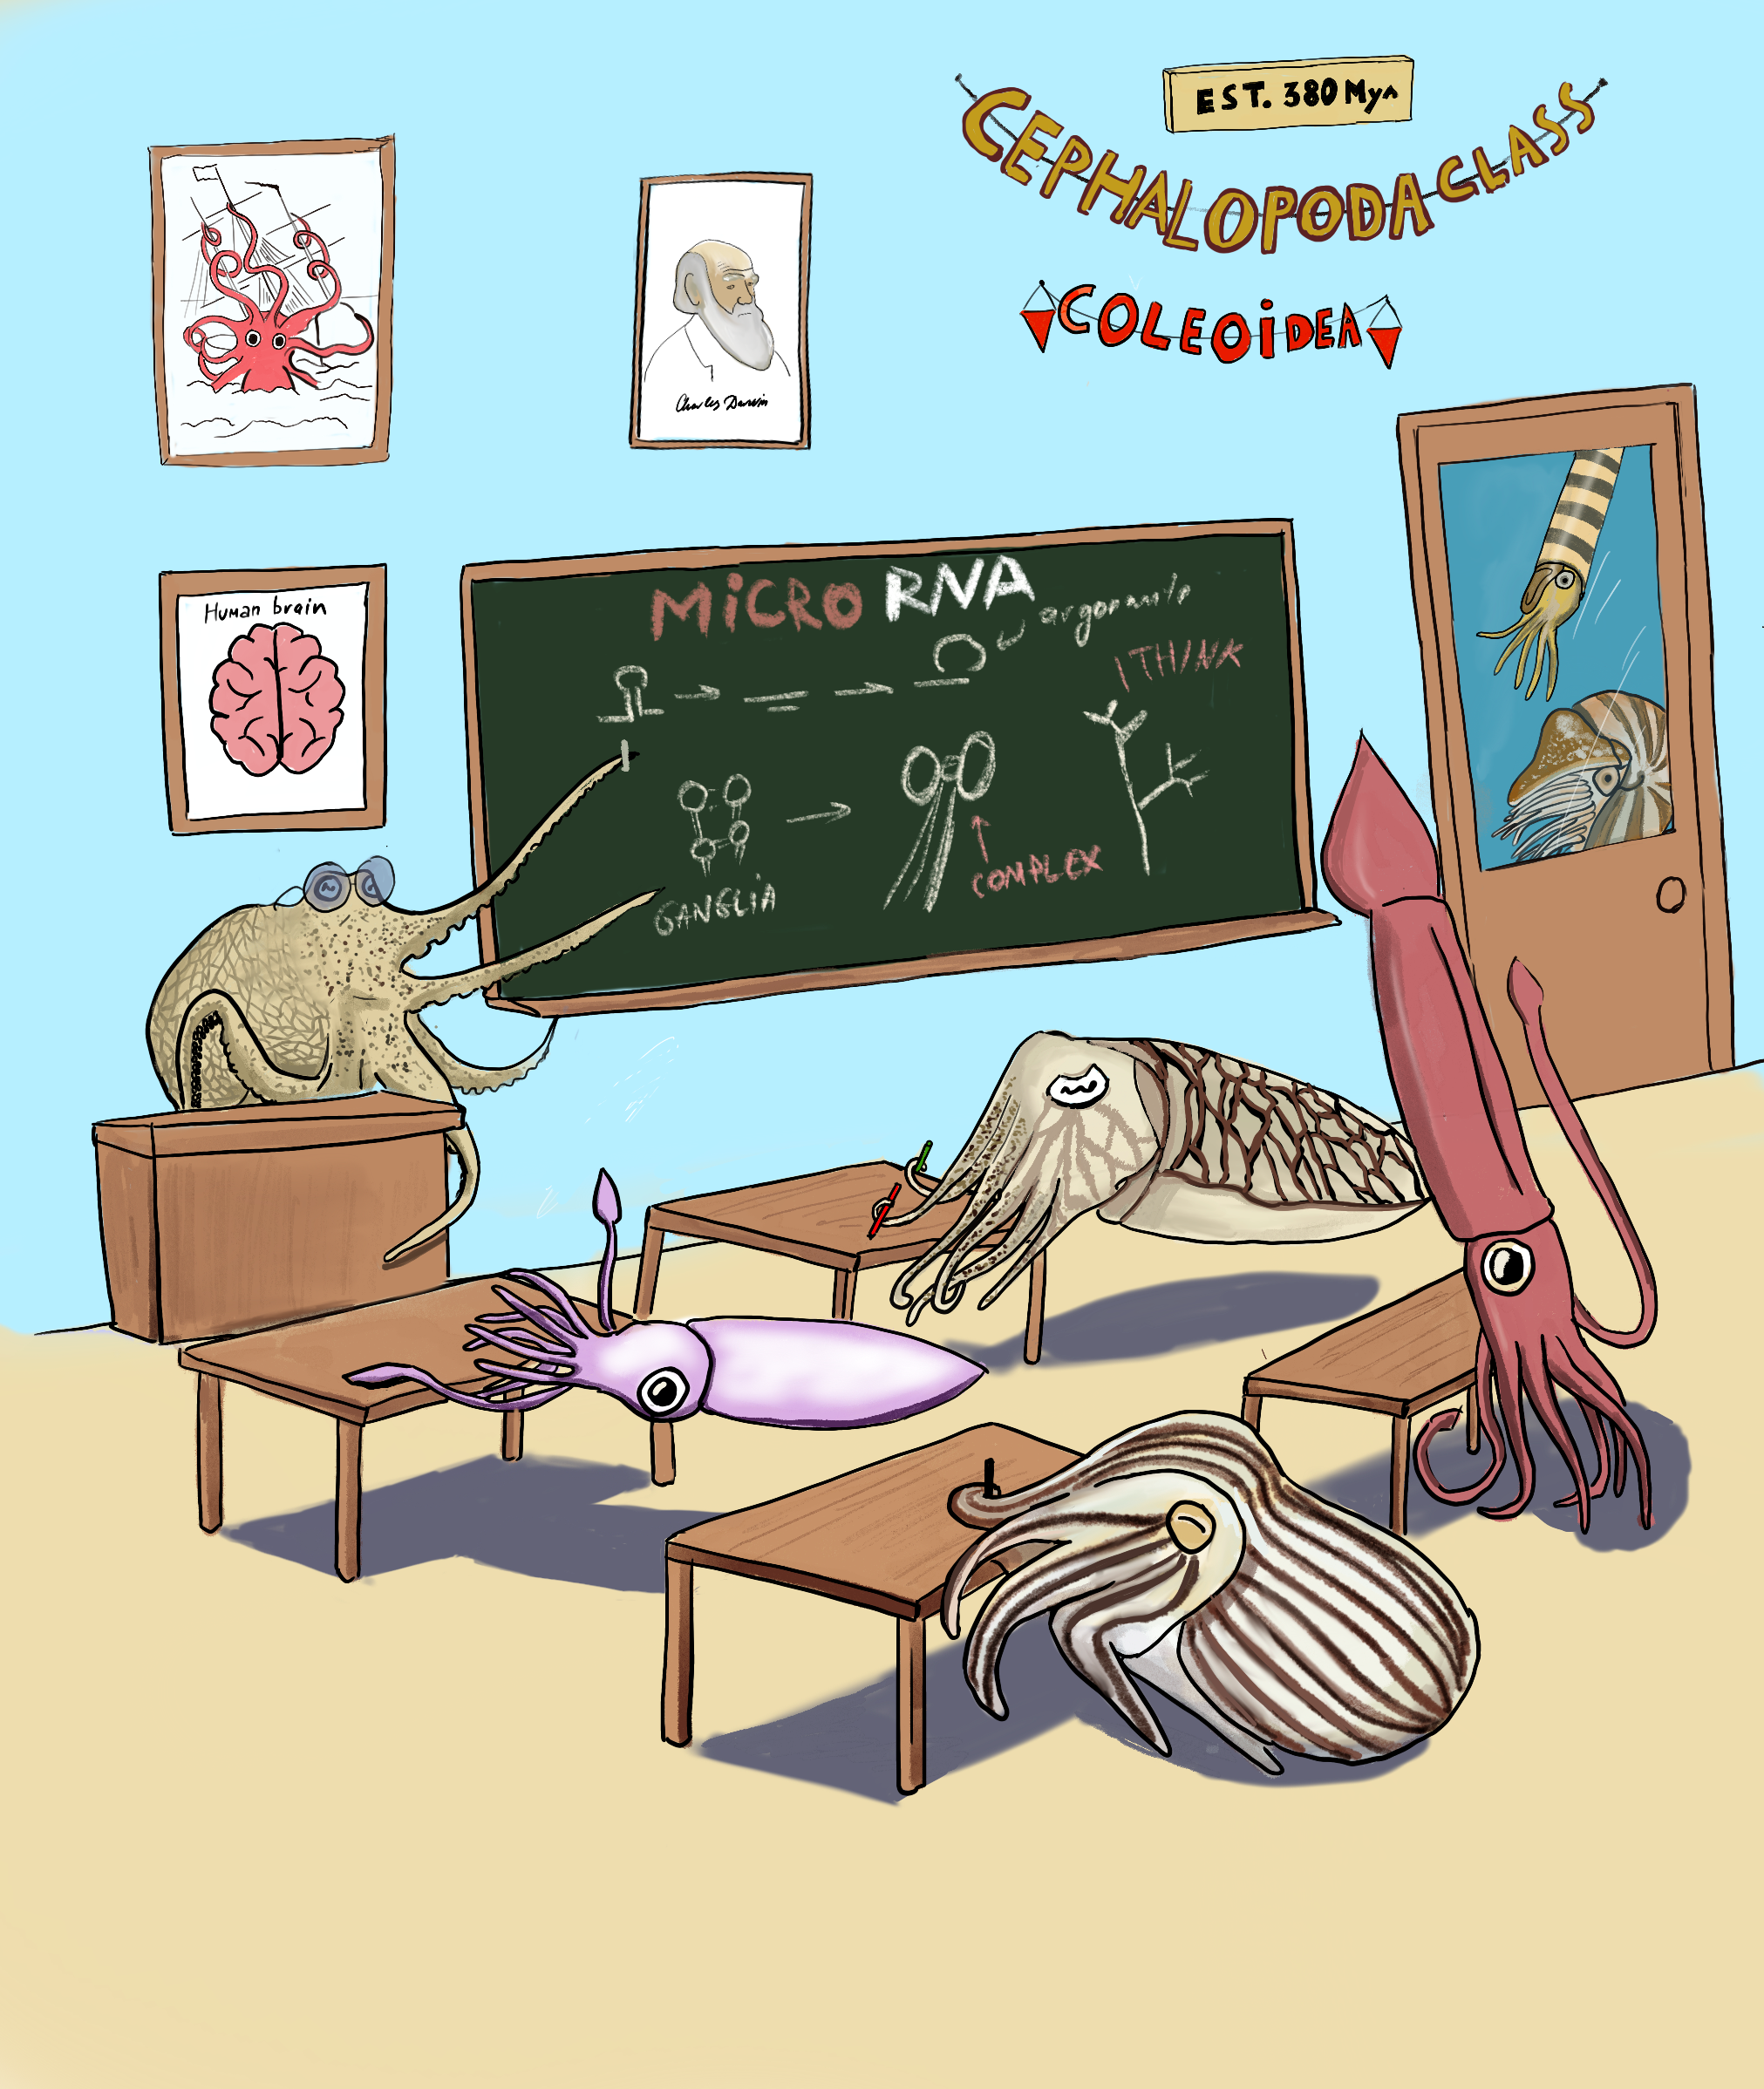 blekkspruter som sitter på skolebenken og lærer om RNA og sin egen hjerne